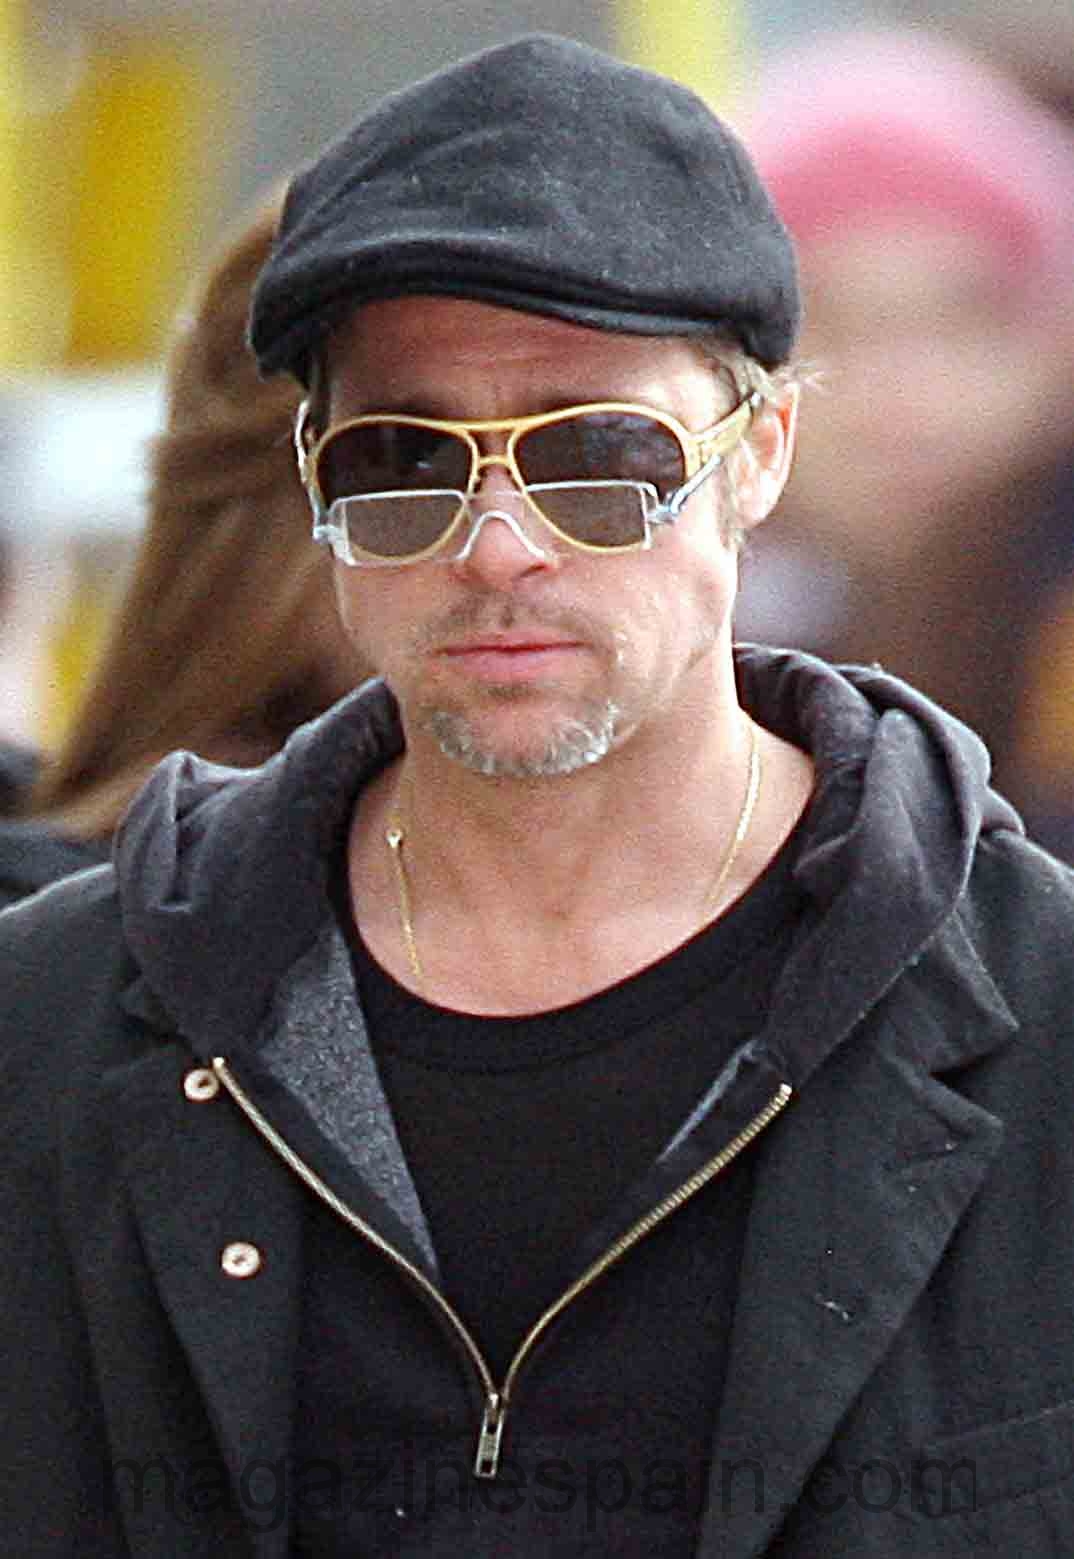 Brad Pitt 2004-20151074 x 1559